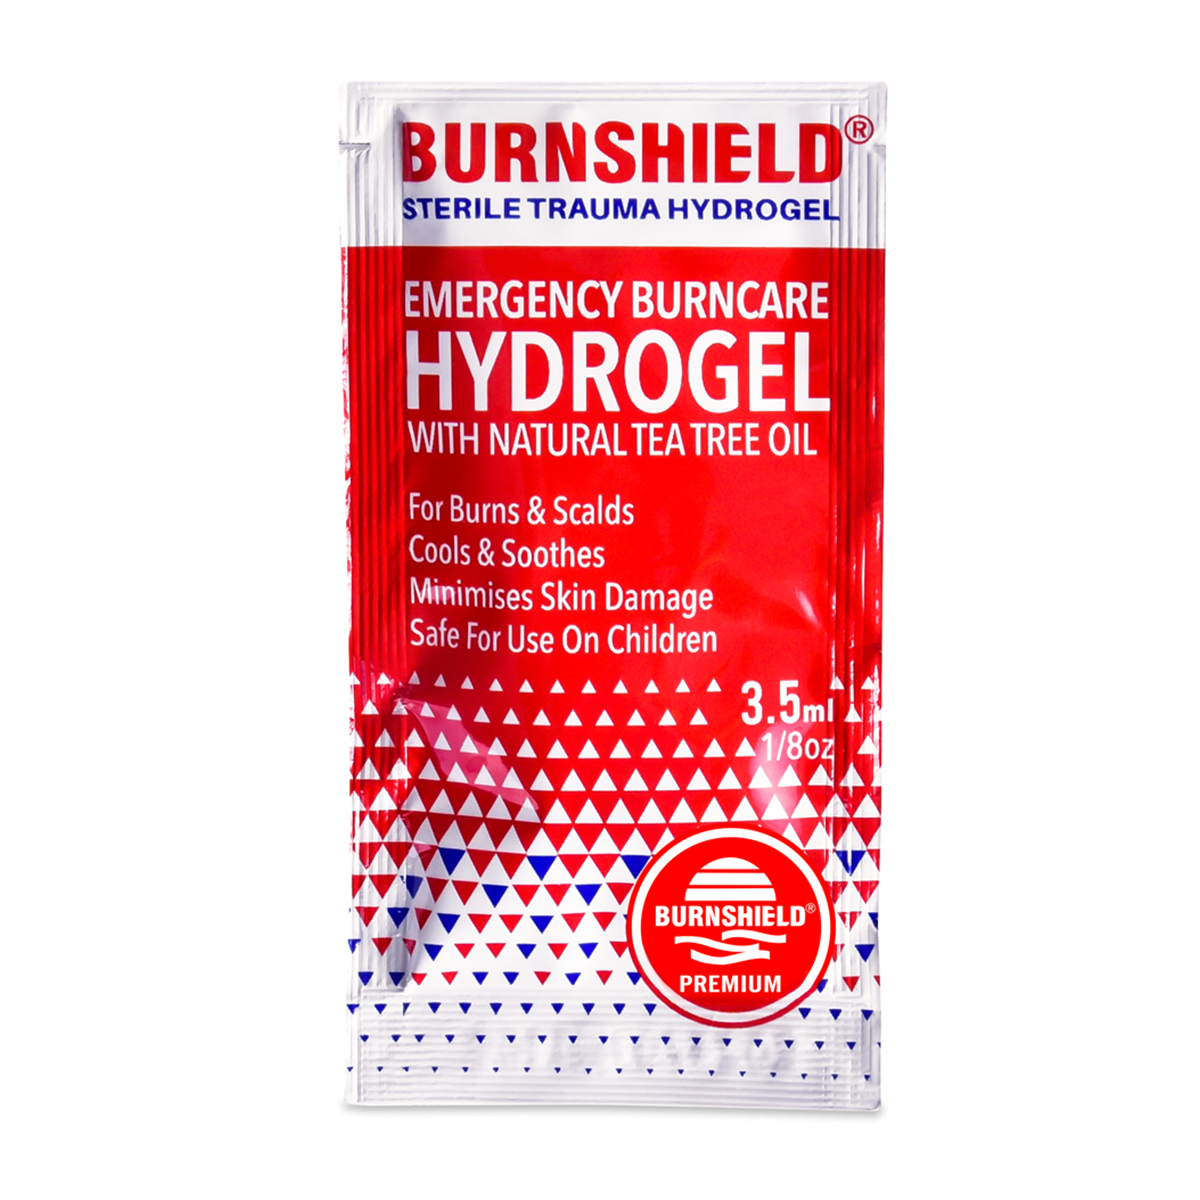 Burnshield 3.5ml hydrogel sachet